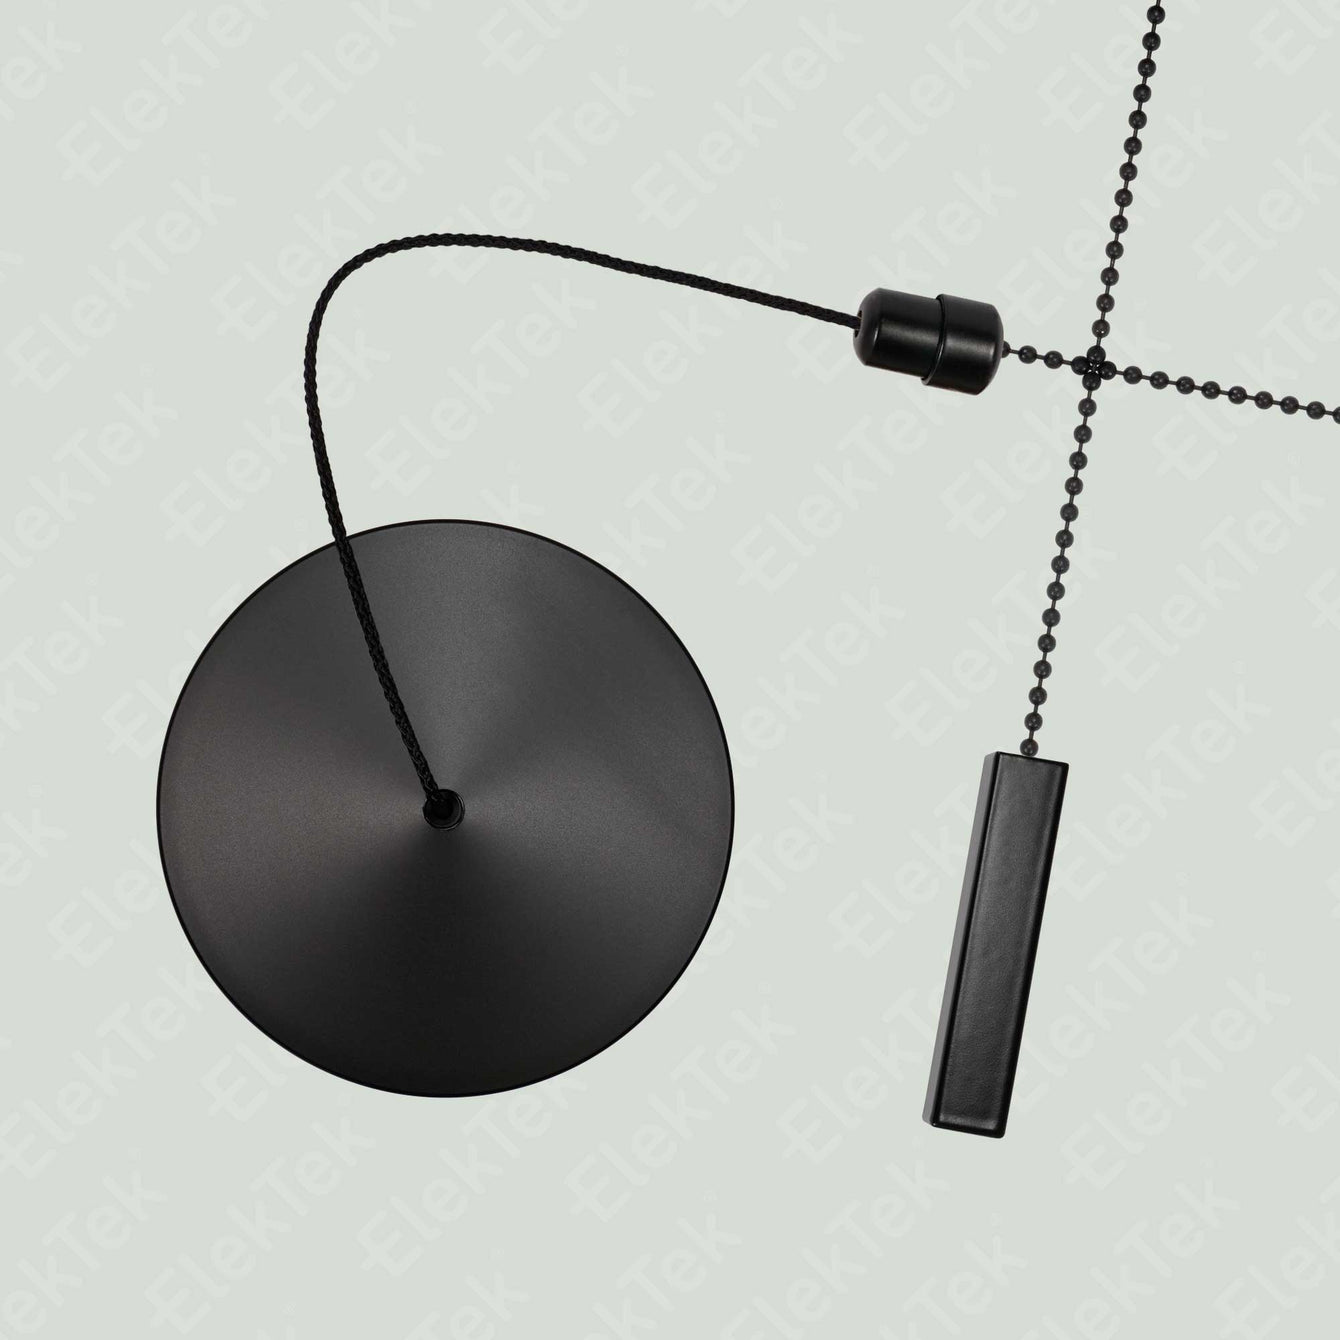 ElekTek Premium Matt Black Bathroom Light Pull Cord Switch Kit with Pull Chain Handle Black Cylinder / Black